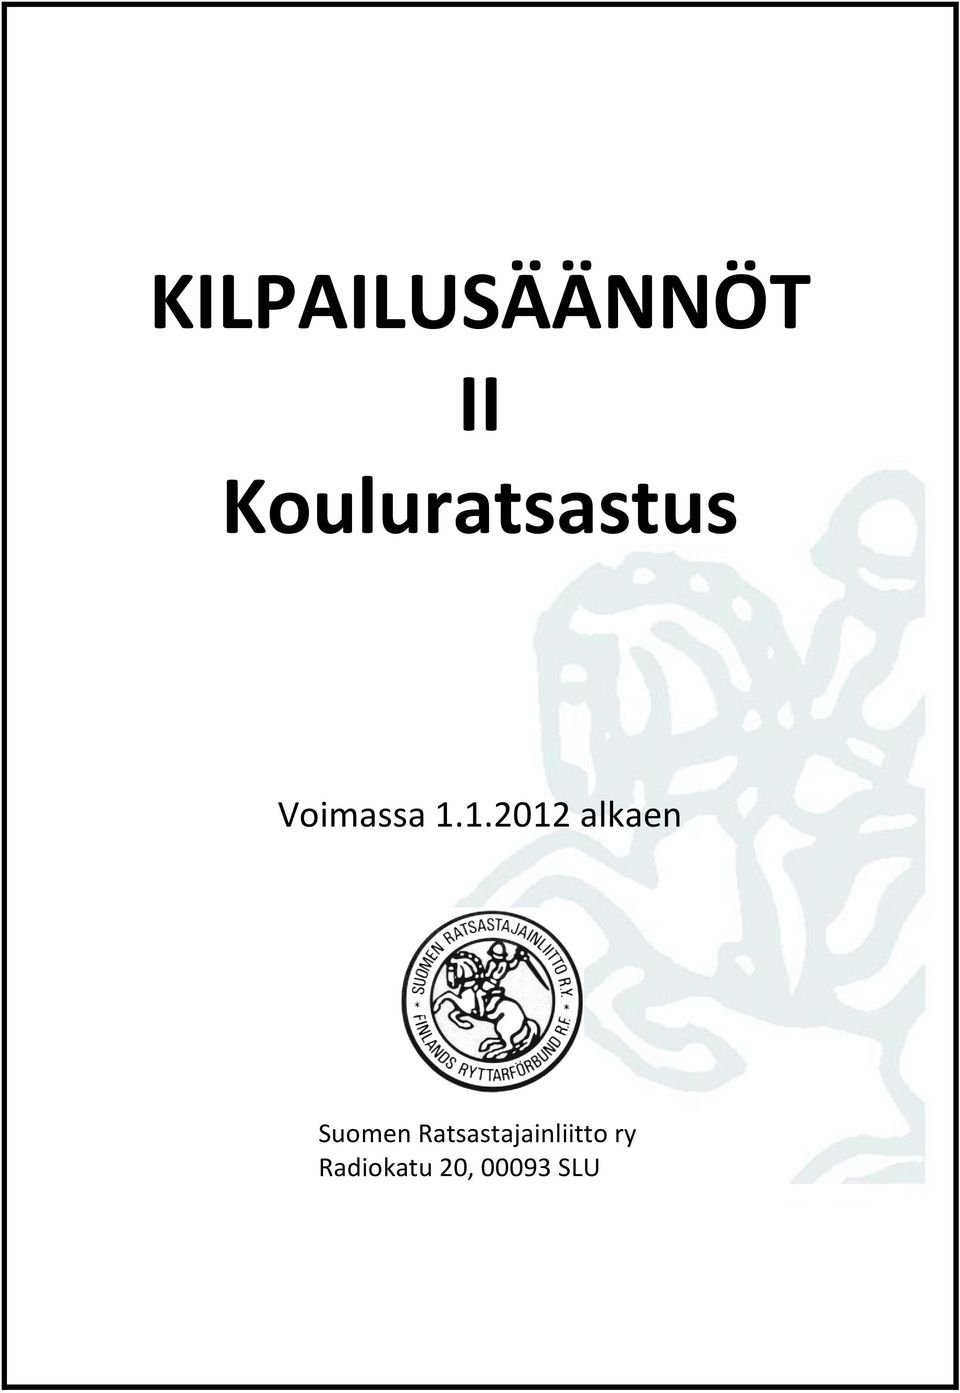 1.2012 alkaen Suomen